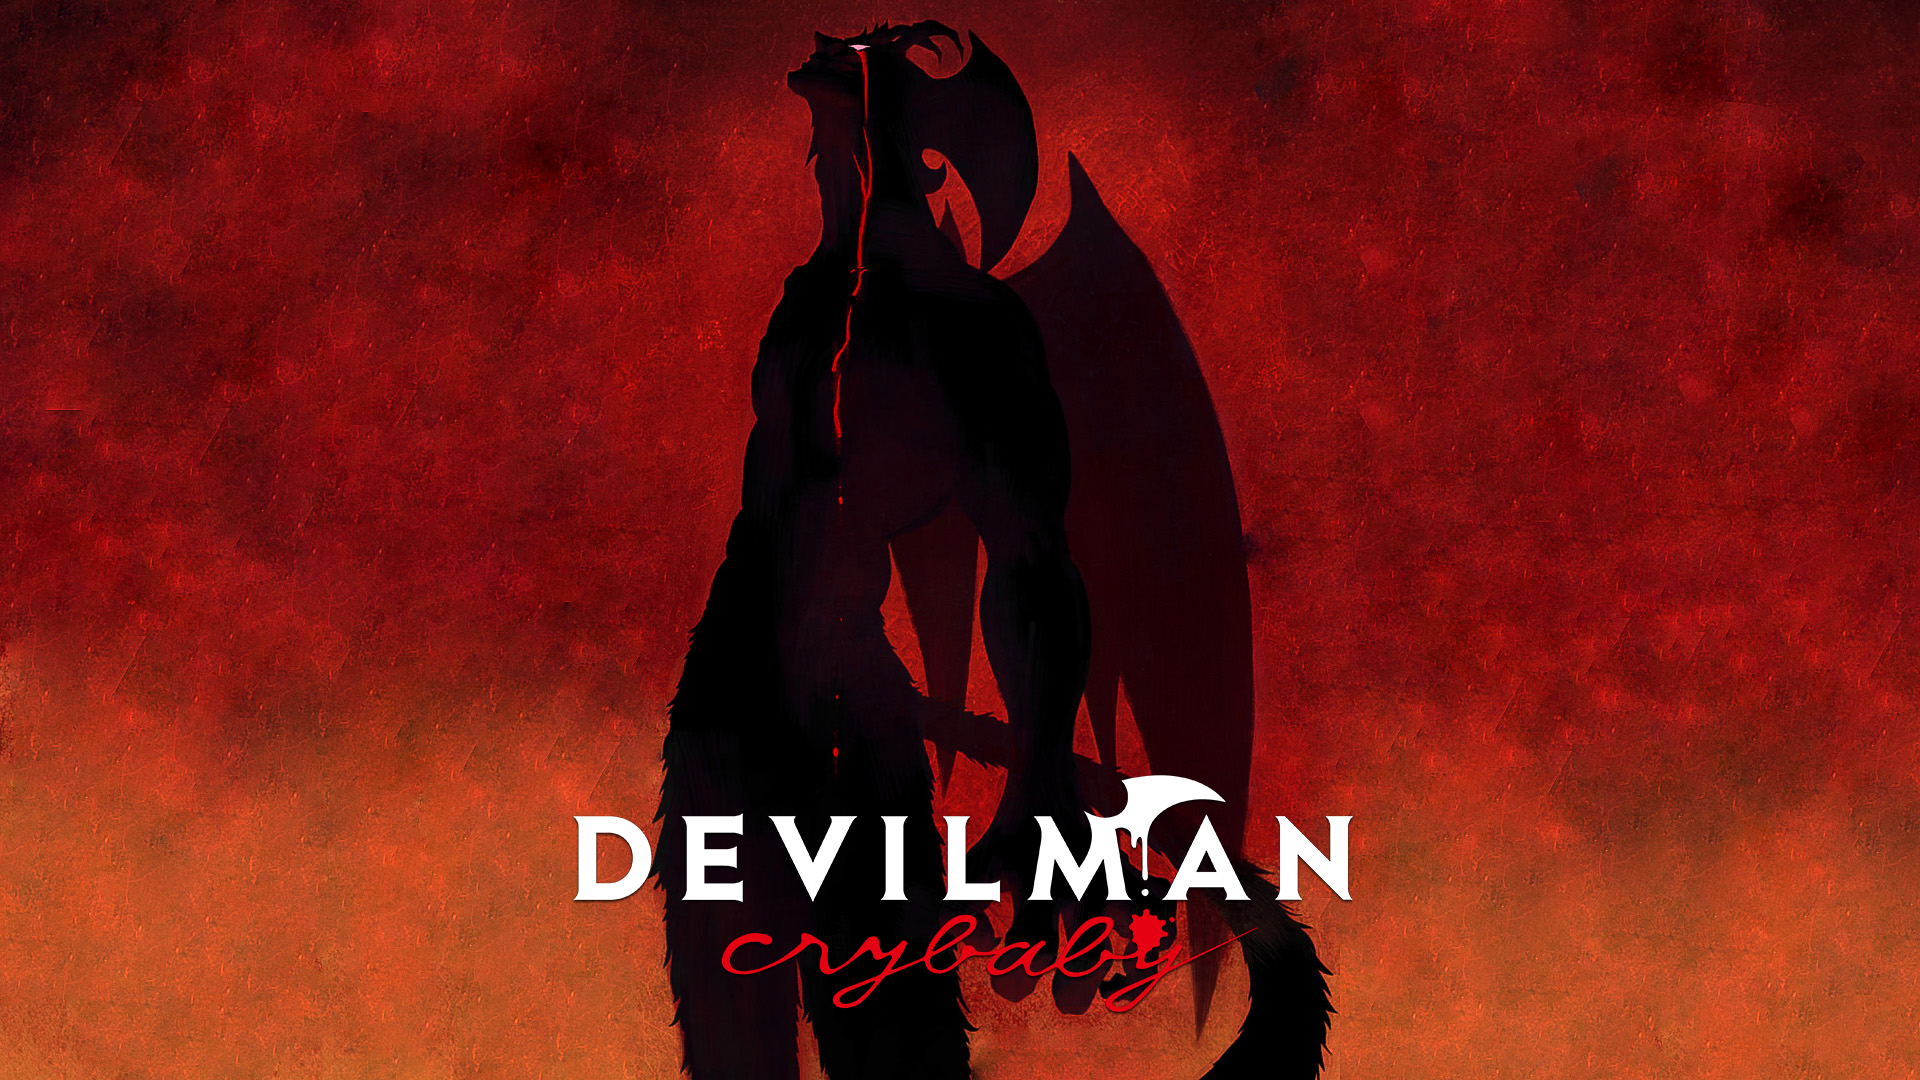 Devilman Wallpapers